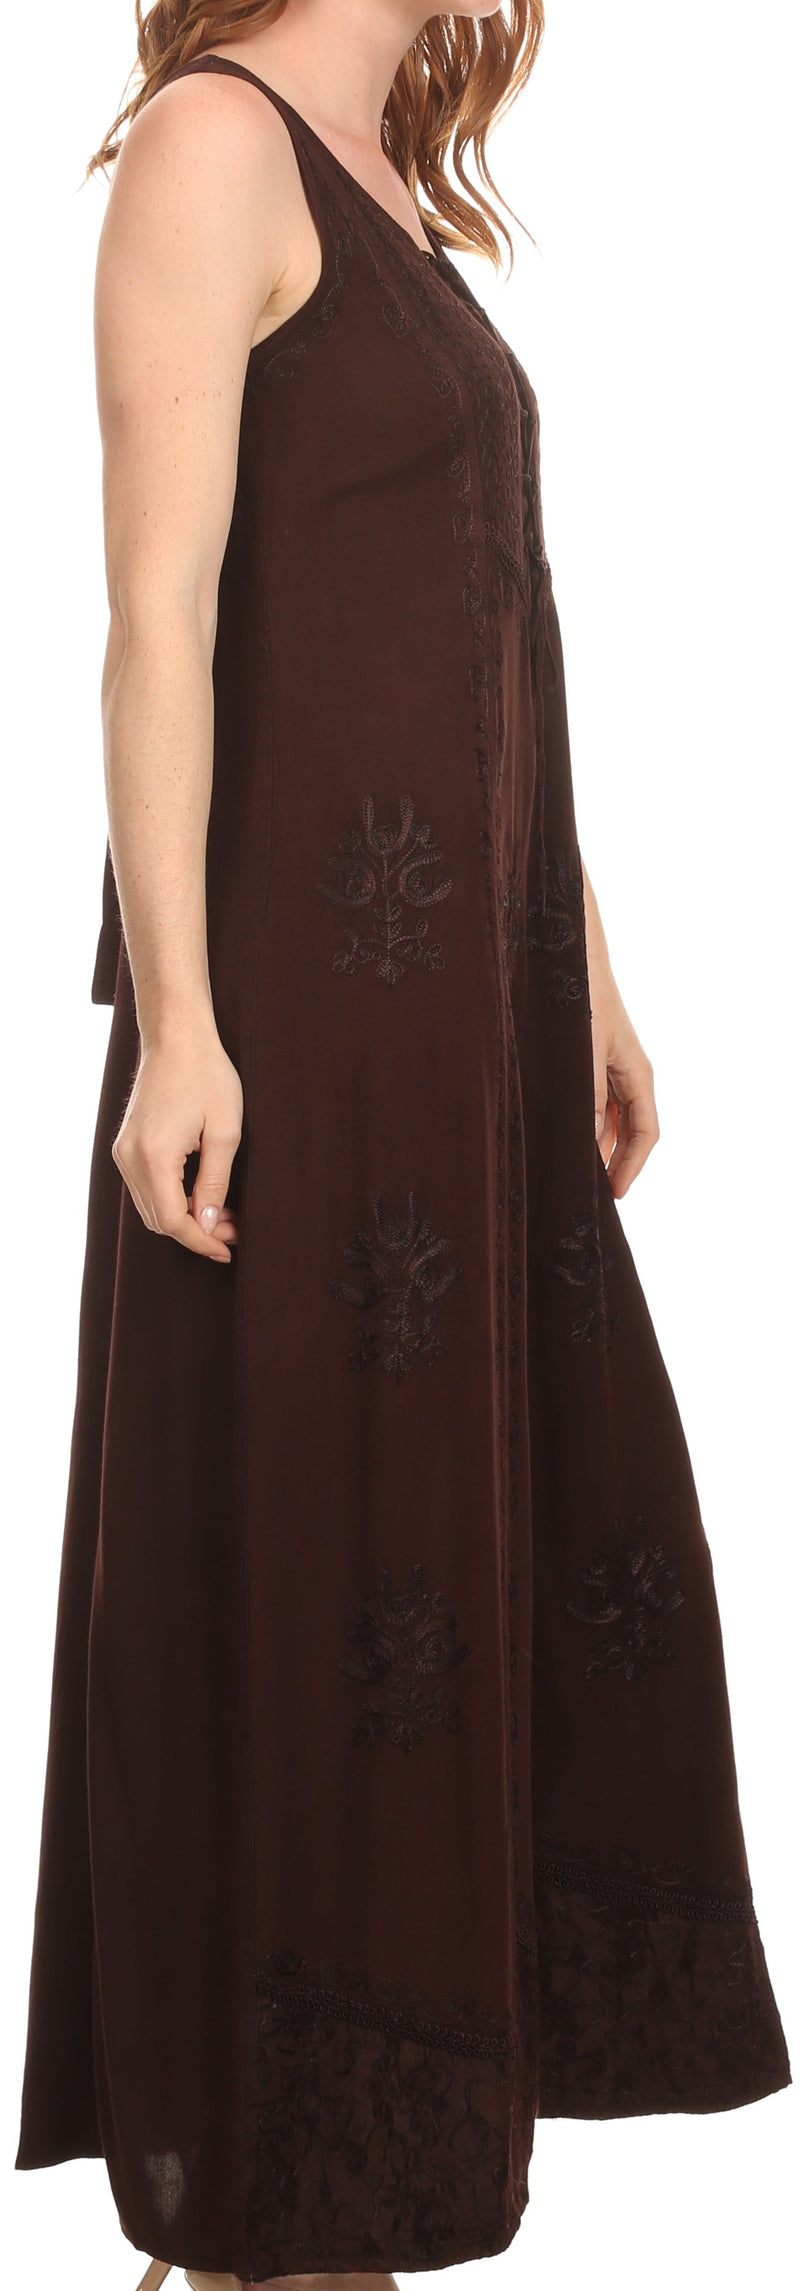 Sakkas Stella Long Tank Top Adjustable Caftan Corset Dress With Embroidery